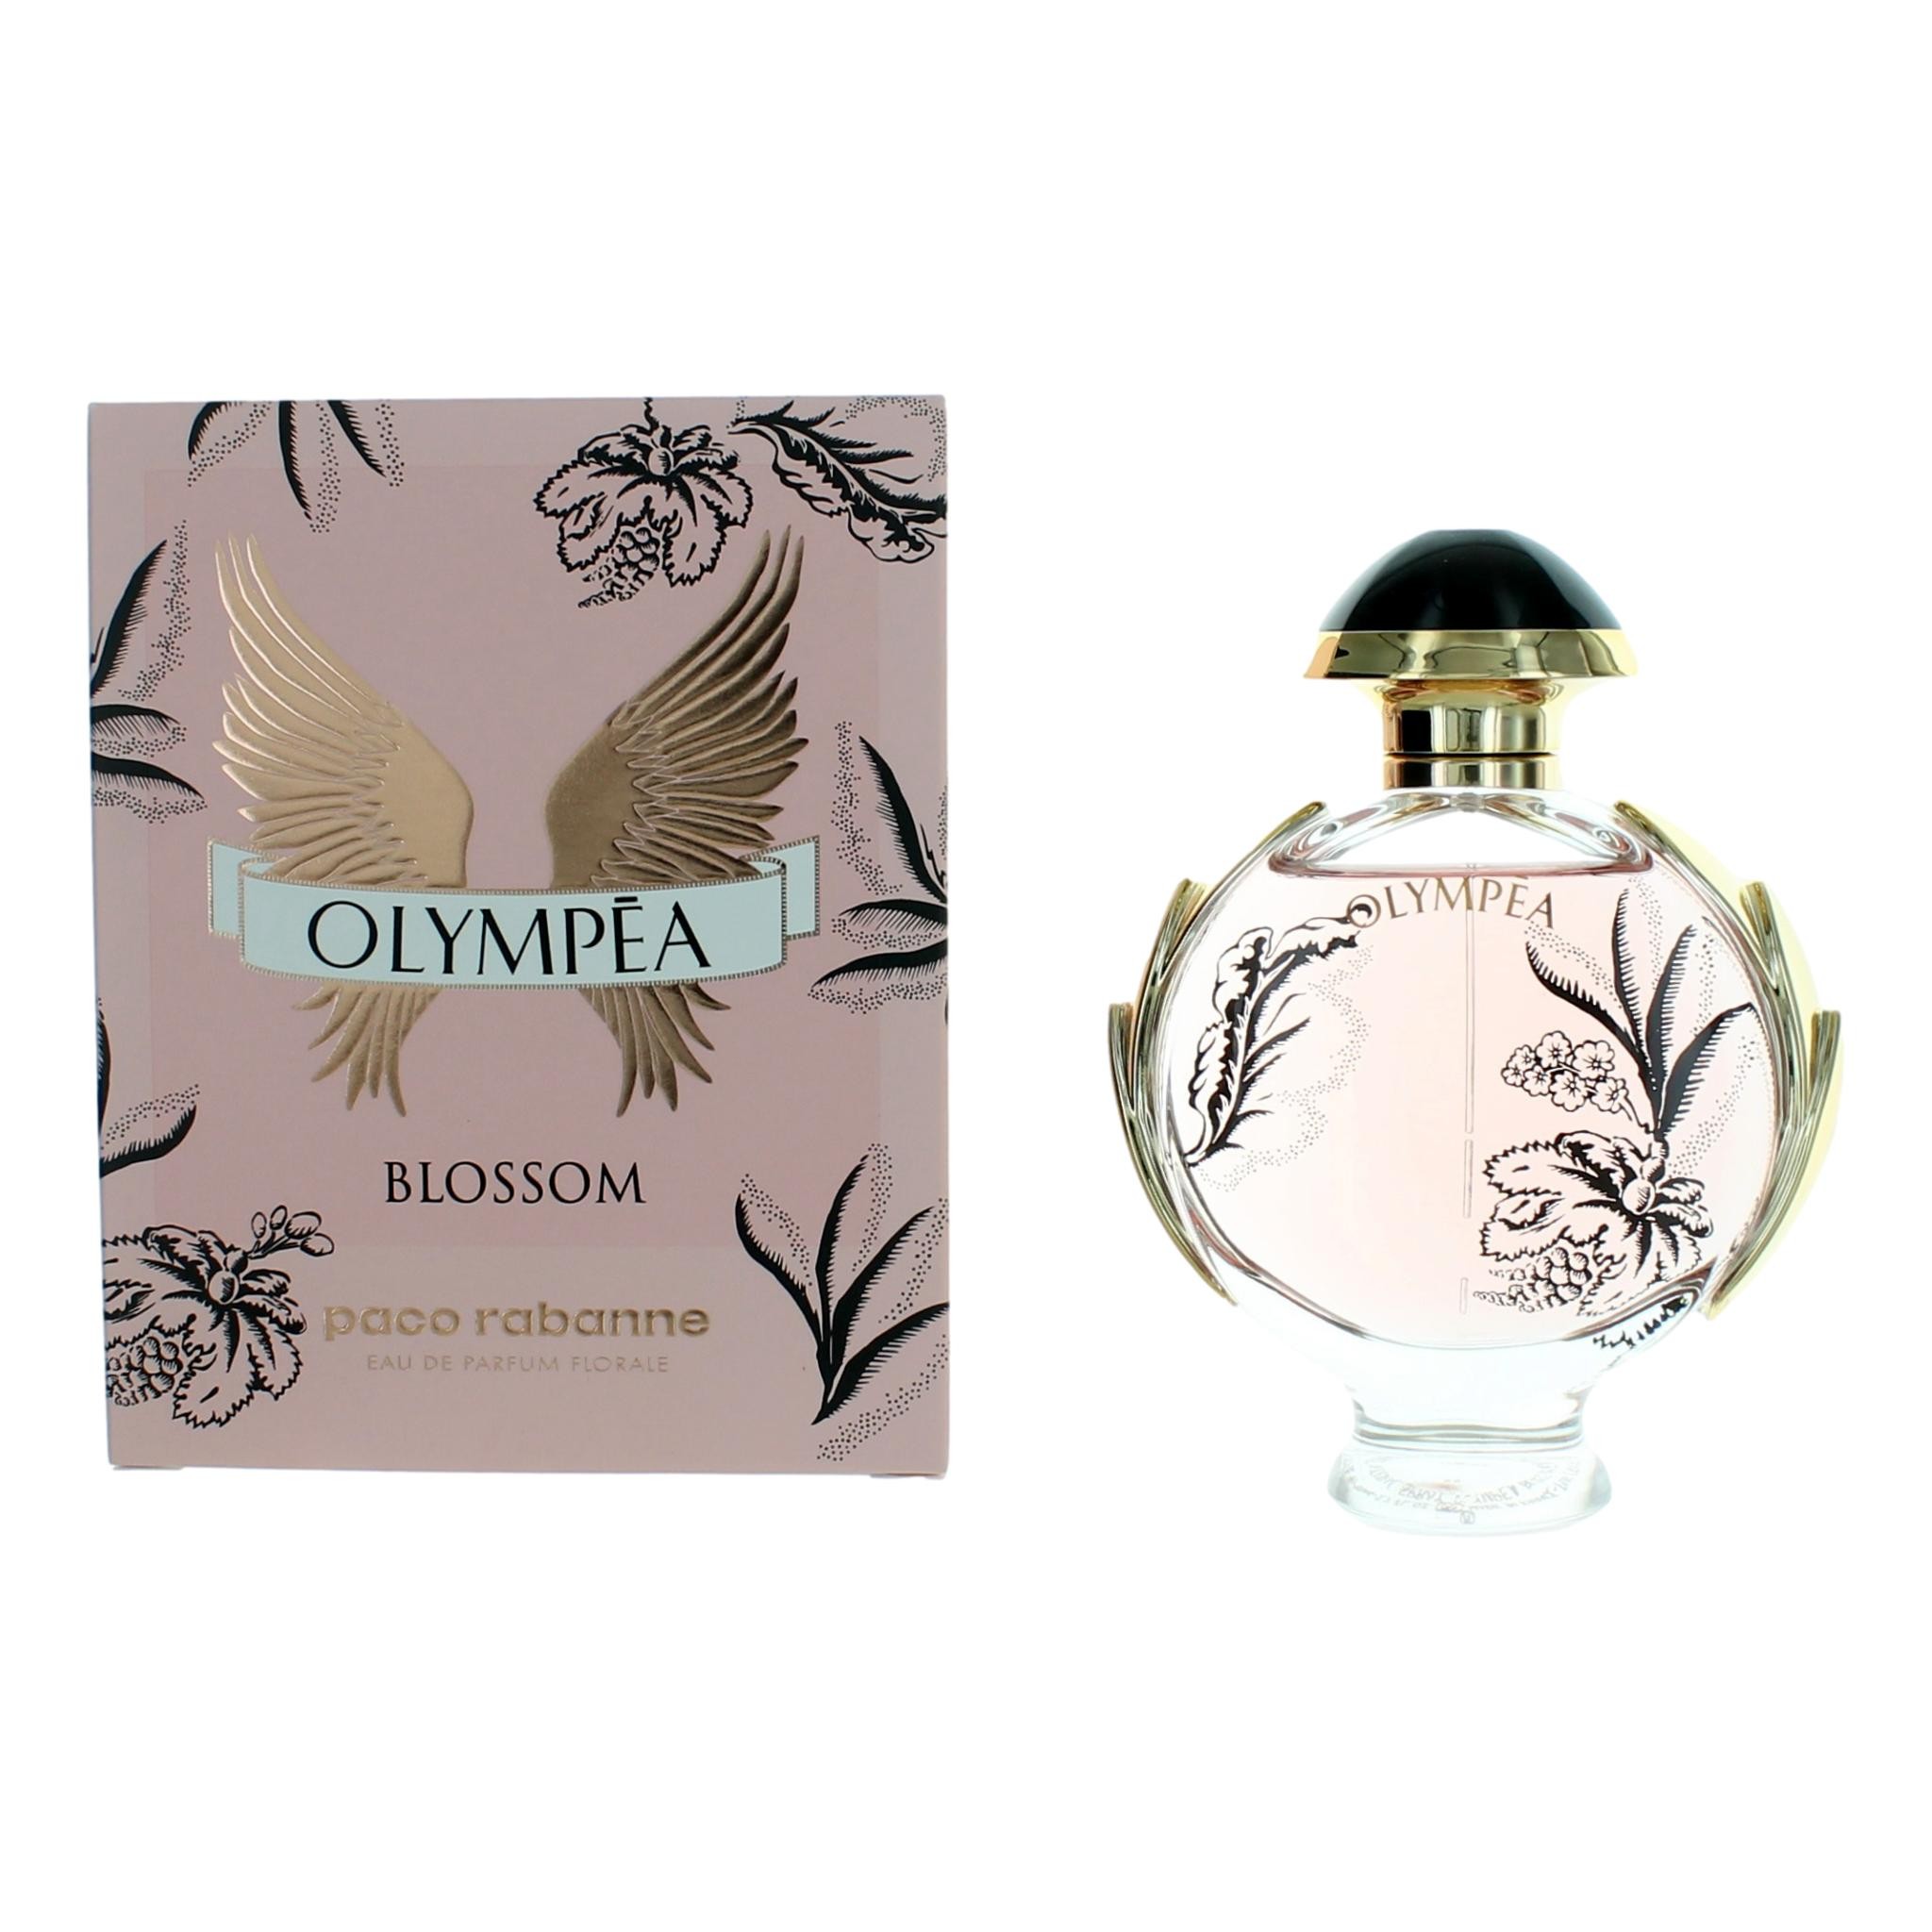 Olympea Blossom by Paco Rabanne 2.7 oz Eau De Parfum Florale Spray for Women